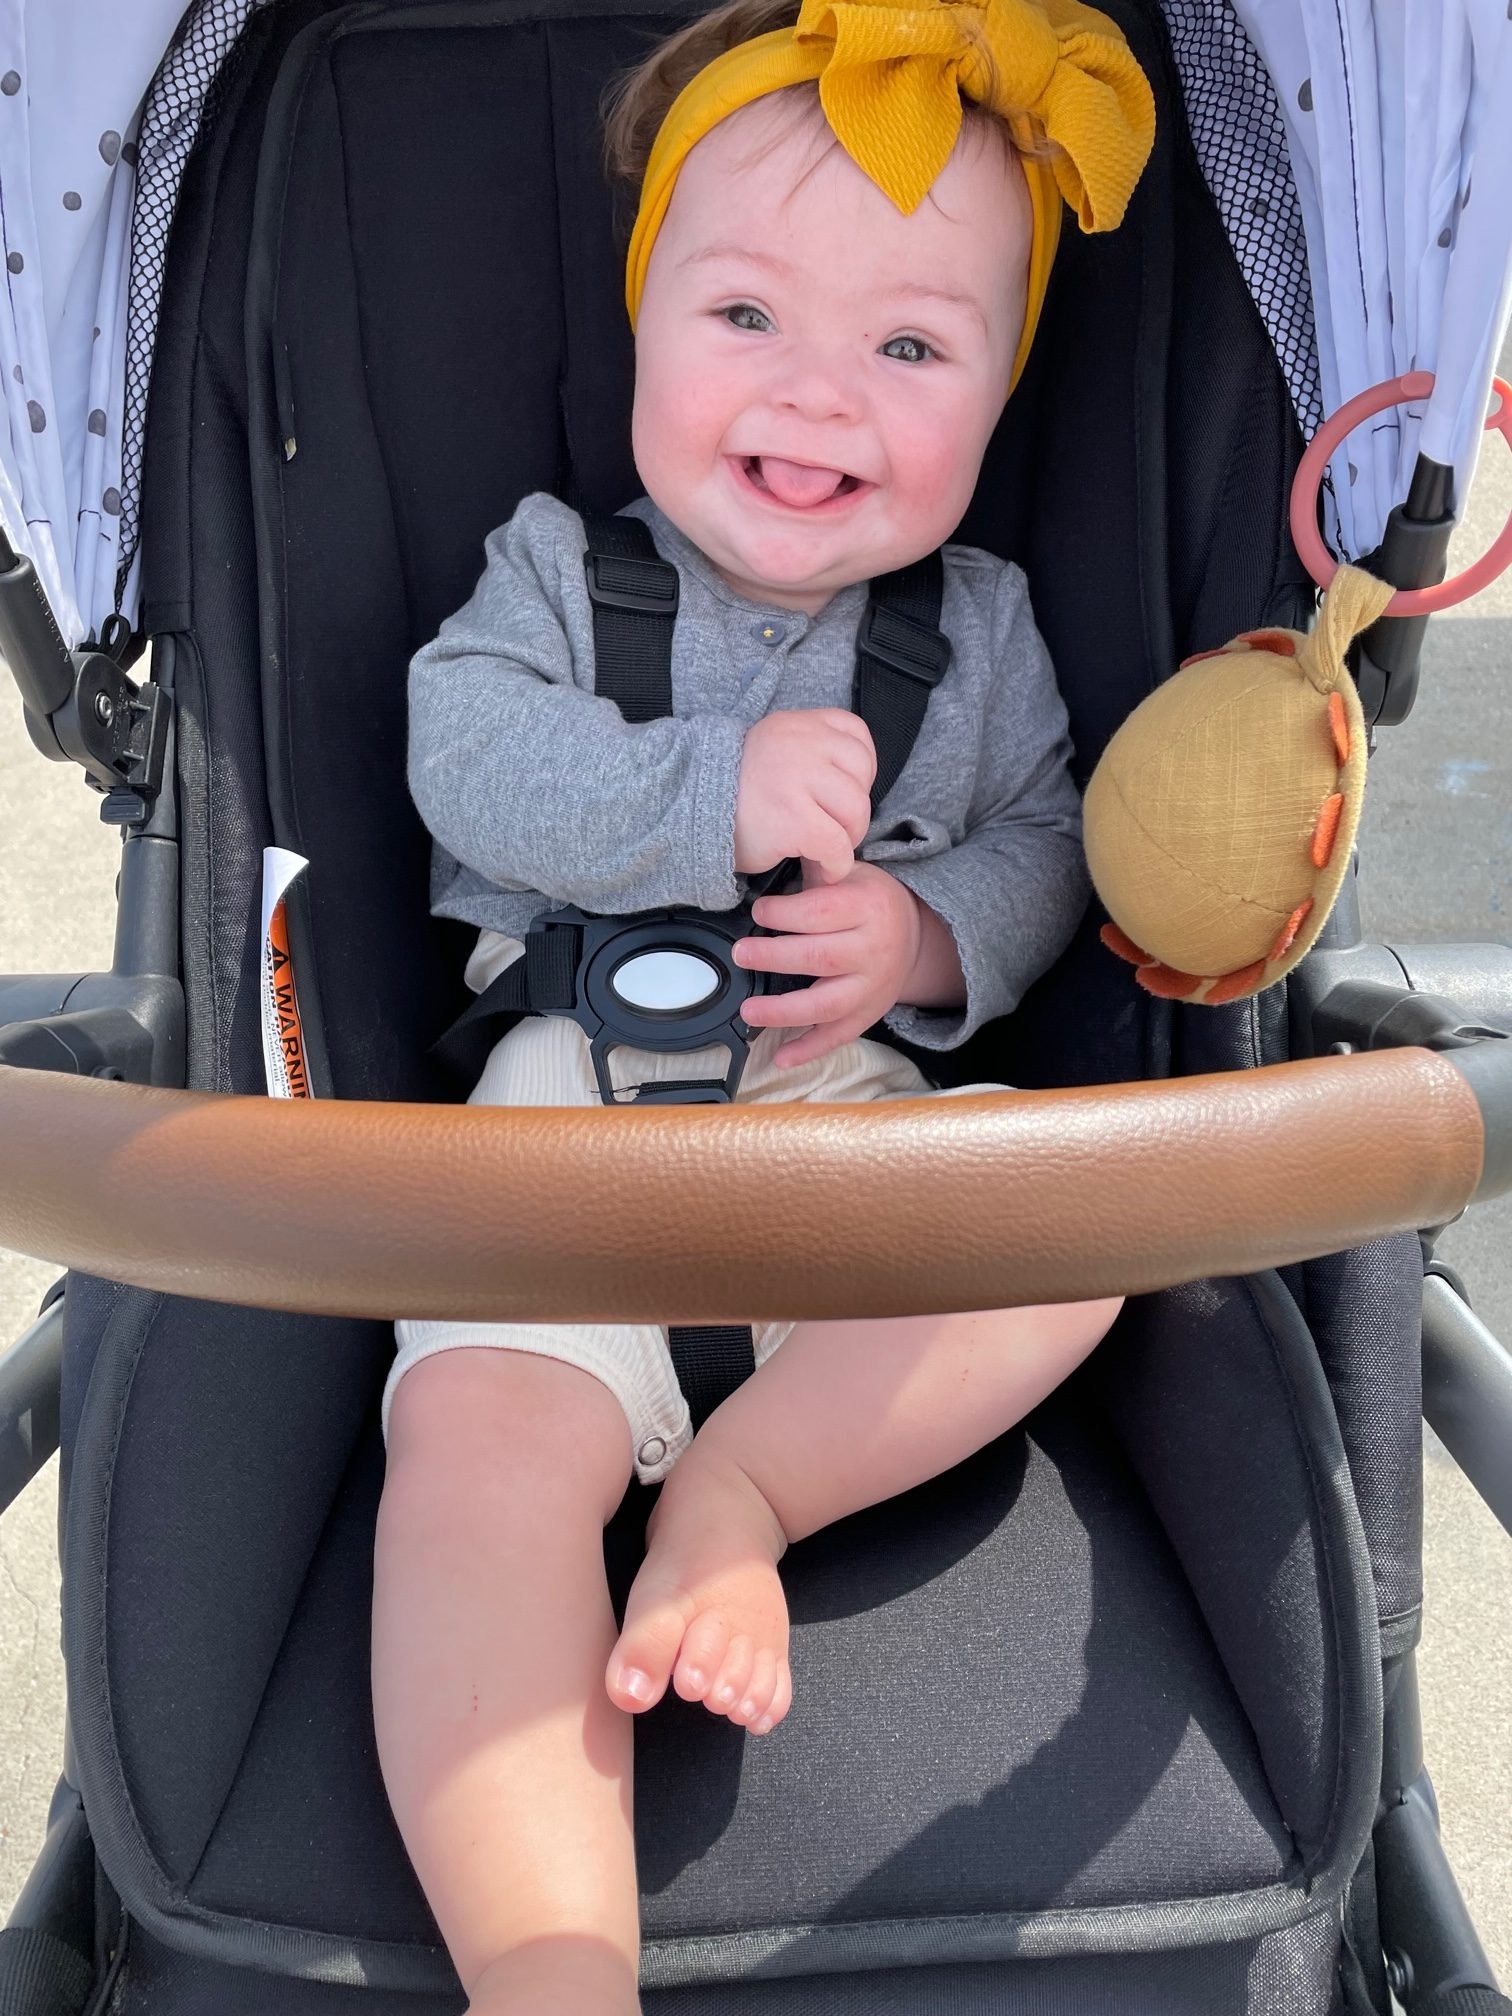 precious baby smiling in stroller